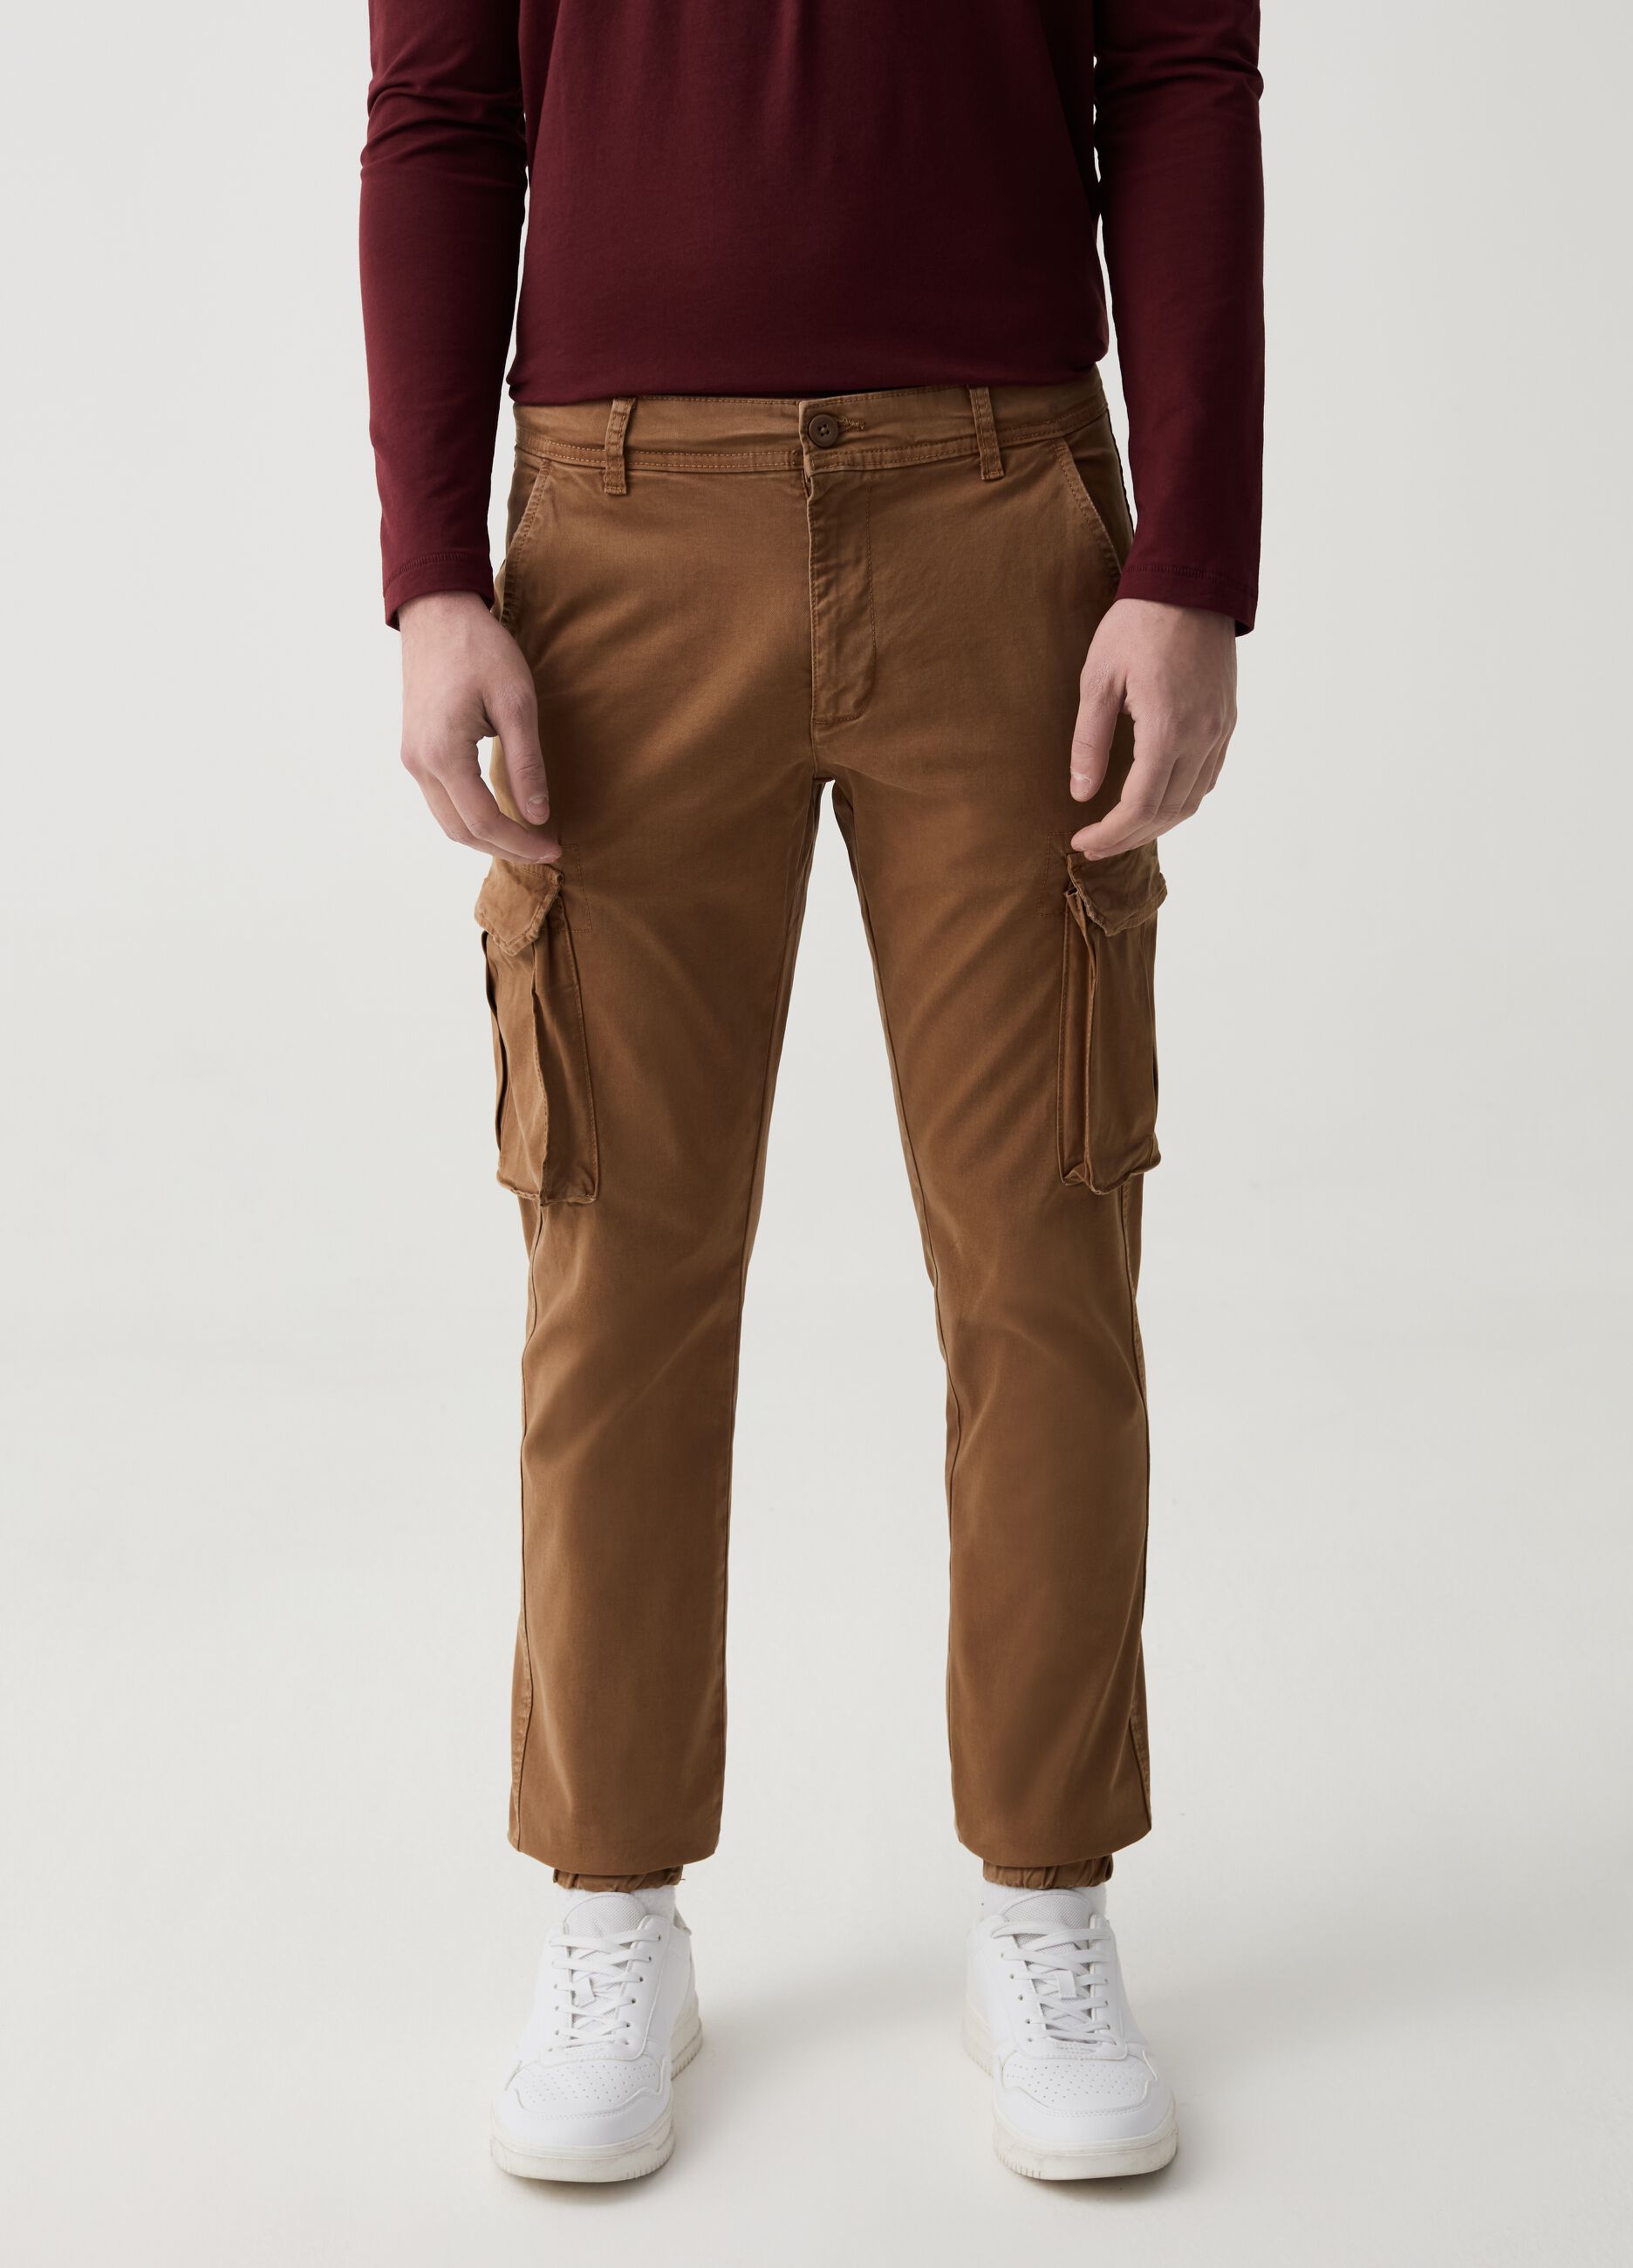 Gap Men's Cotton Khaki Slim Taper Fit Cargo Pants in Acorn Brown $80 NEW  32x32 | eBay